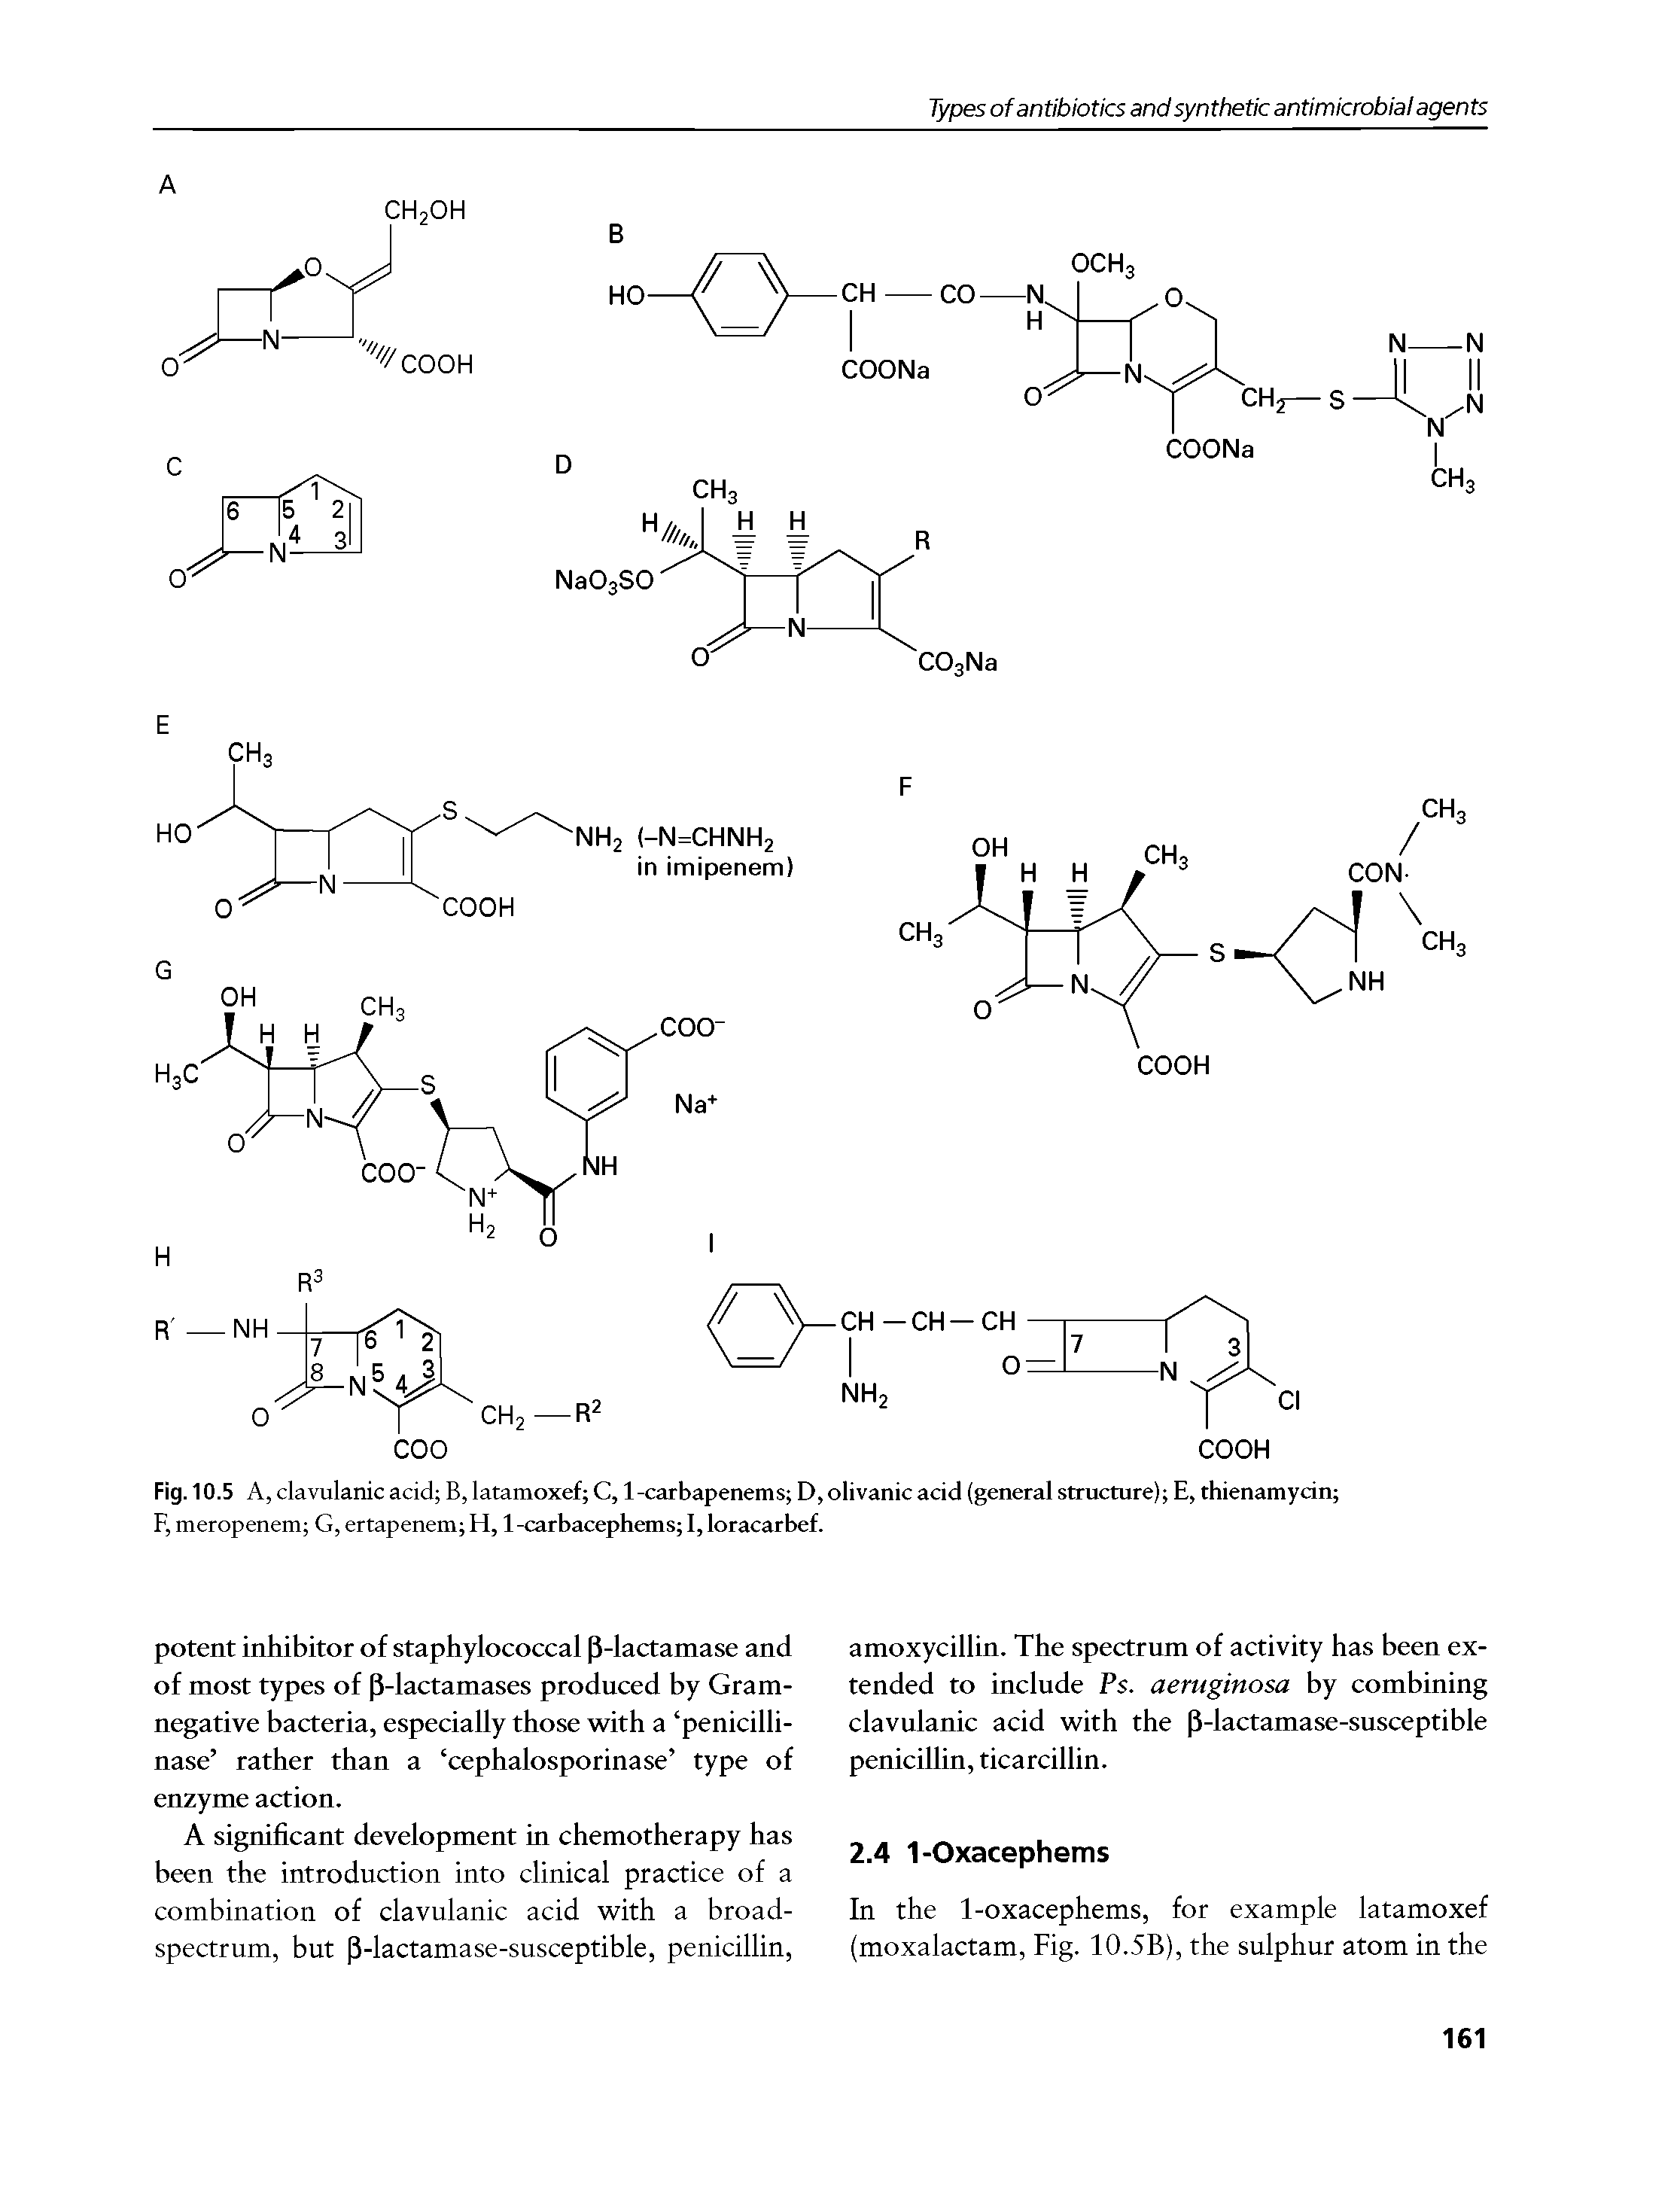 Fig. 10.5 A, clavulanic acid B, latamoxef C, 1-carbapenems D,olivanicacid (general structure) E, thienamycin F, meropenem G, ertapenem H, 1-carbacephems I, loracarbef.